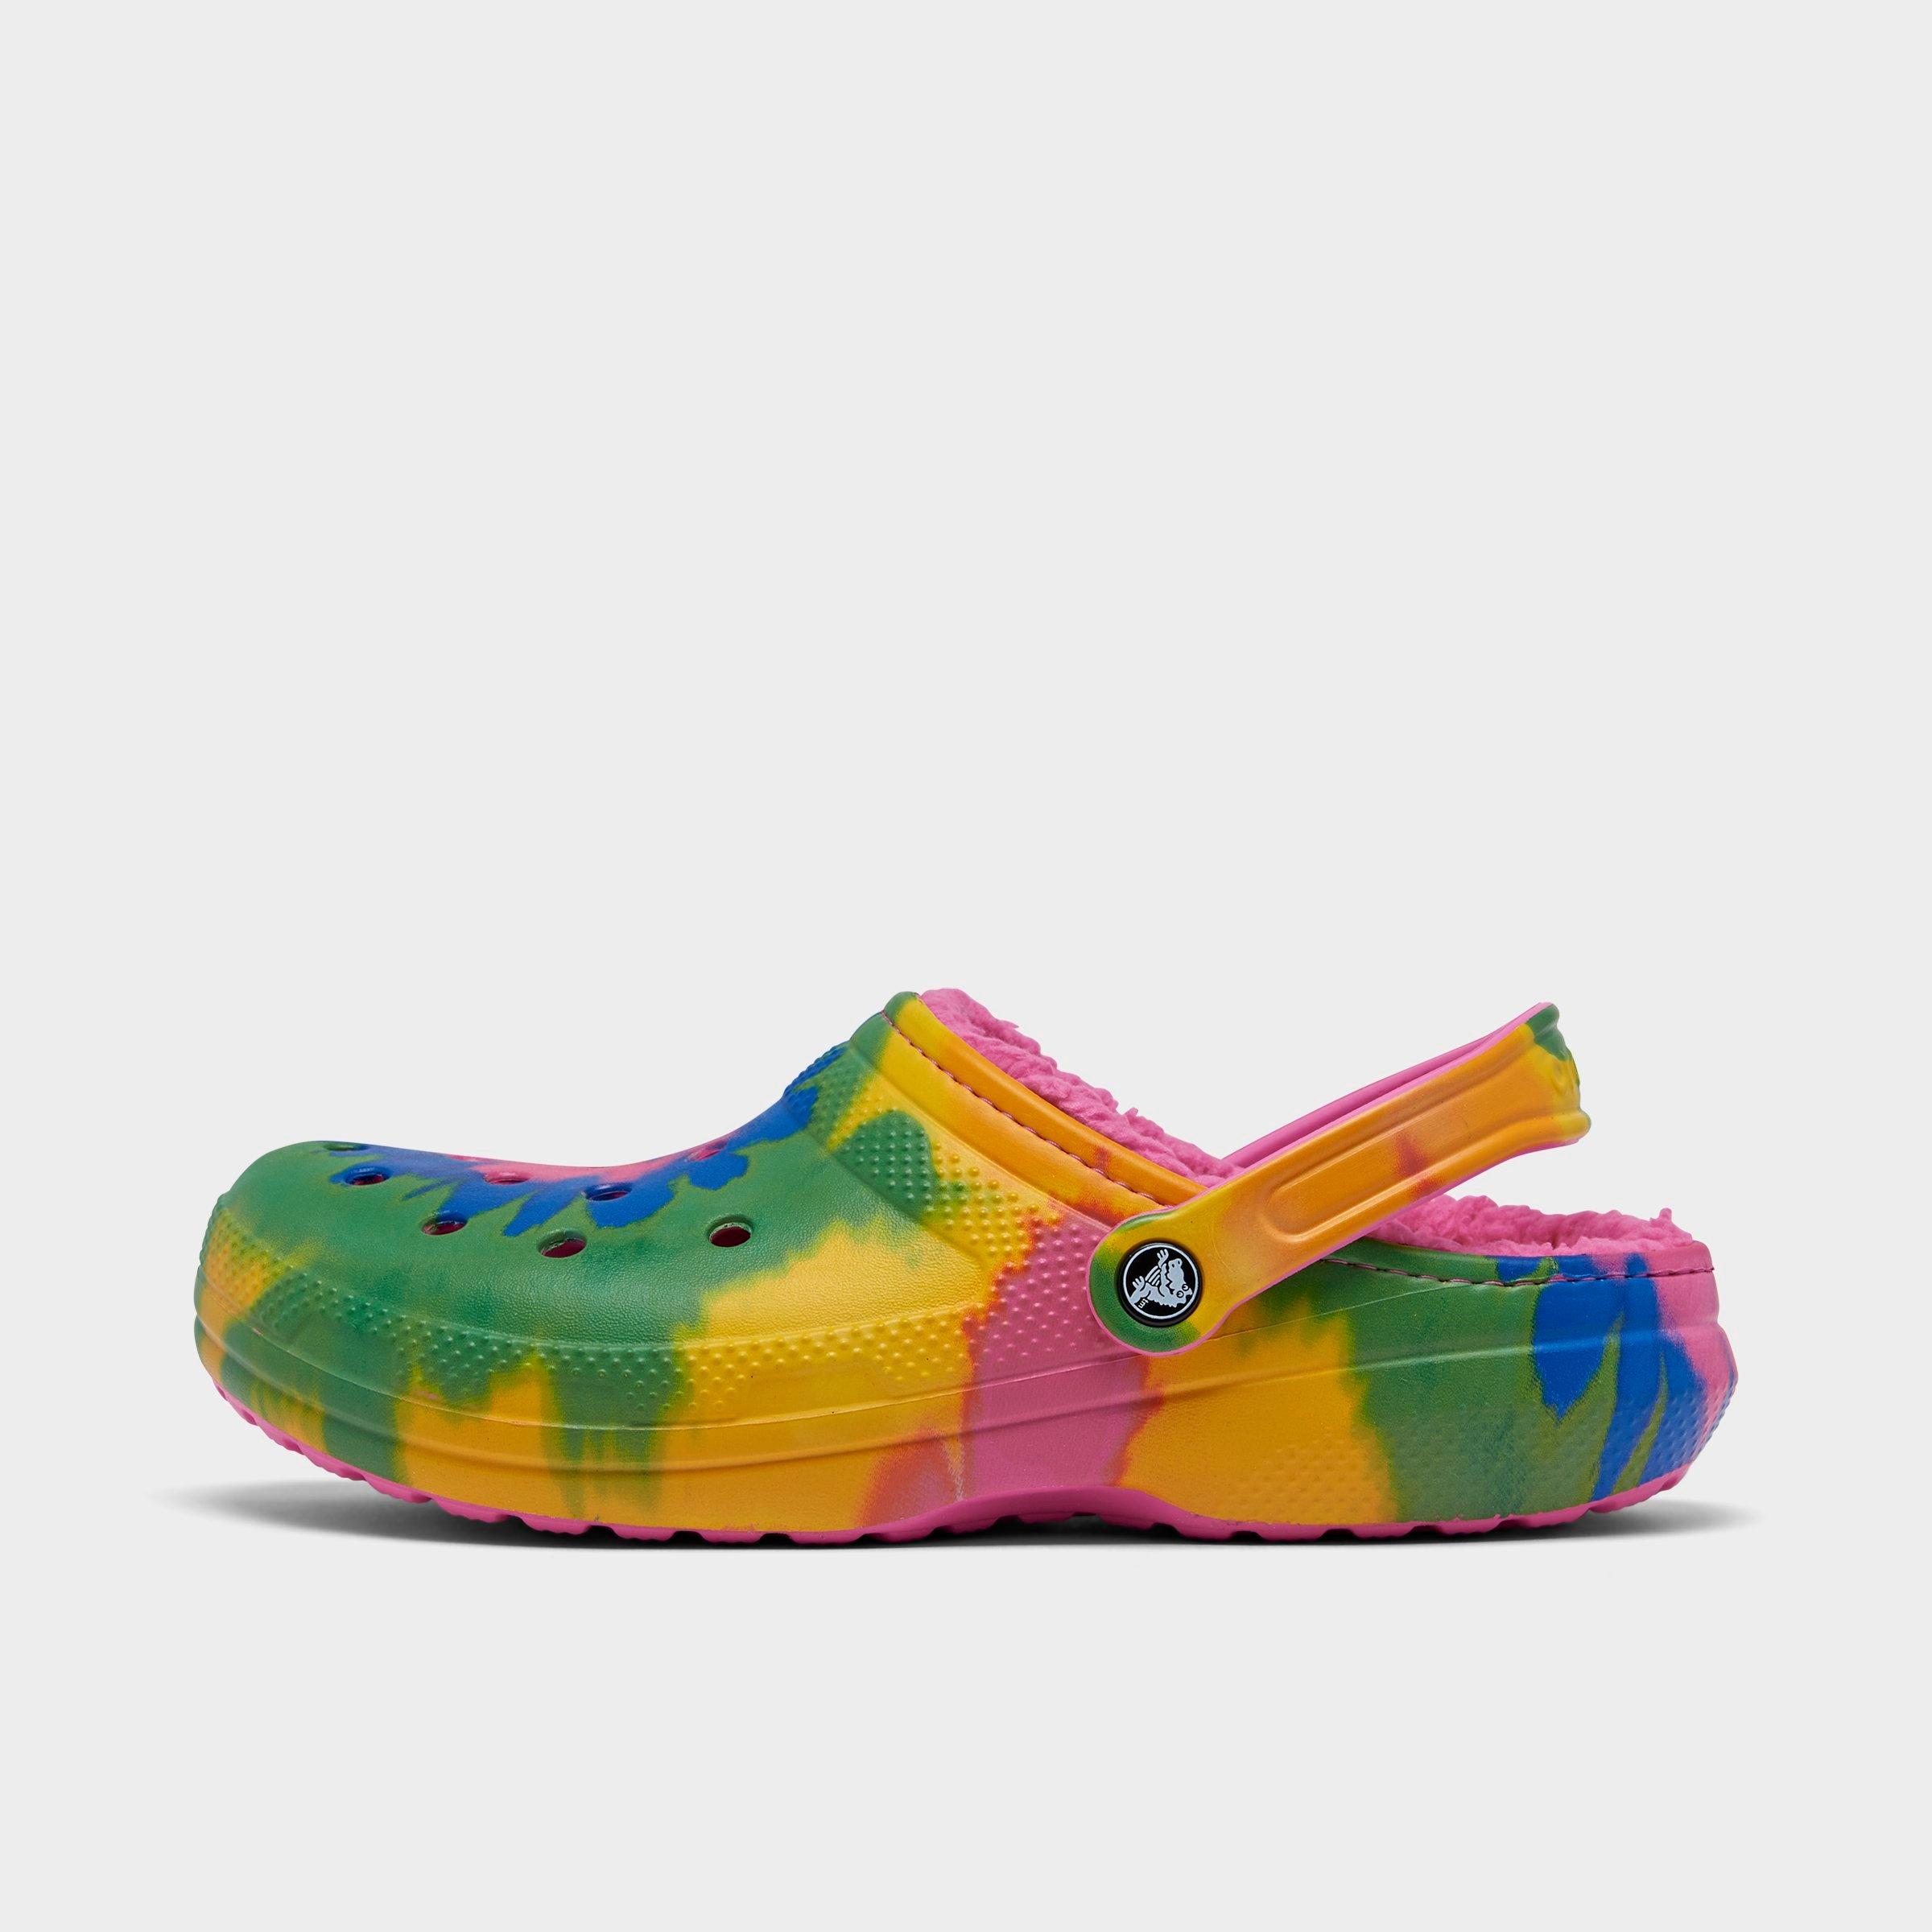 classic tie dye lined crocs